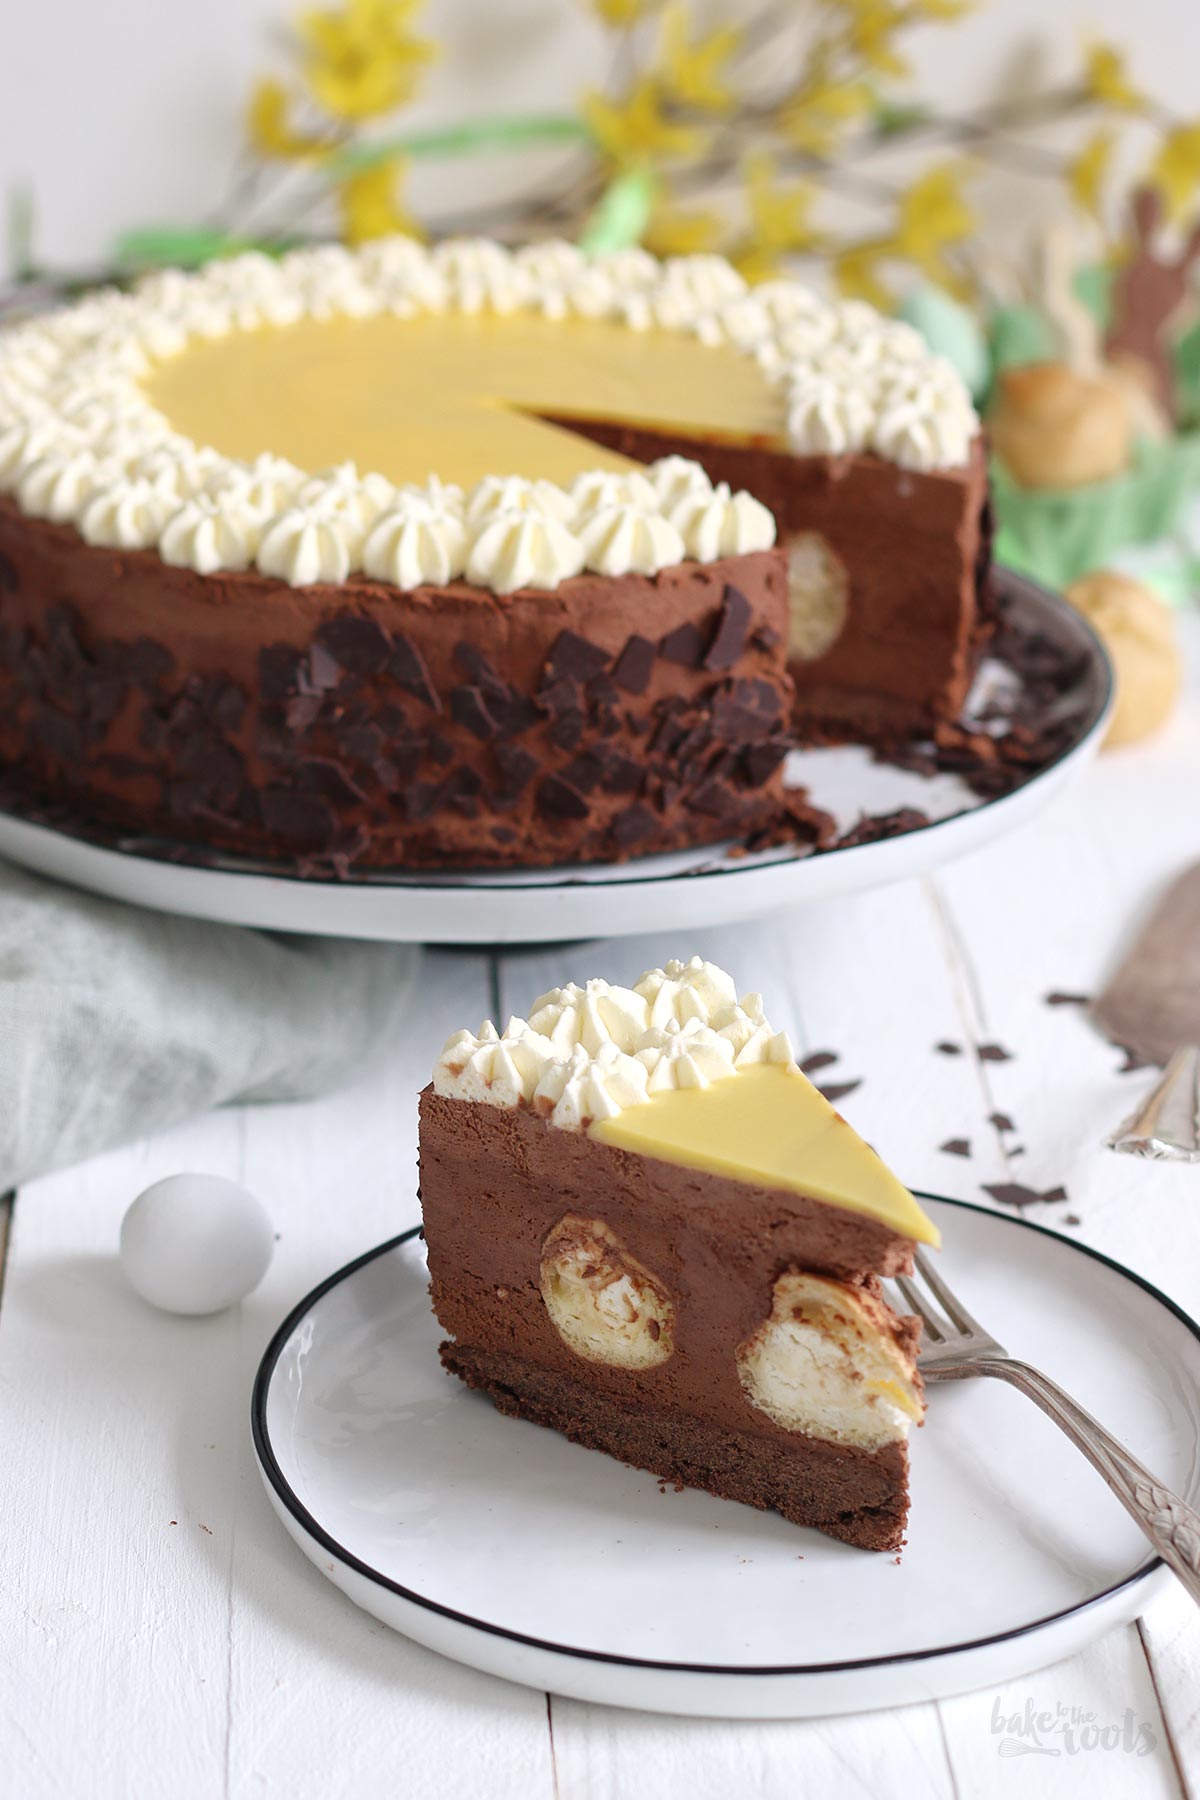 Mousse au Chocolat Windbeutel Torte | Bake to the roots